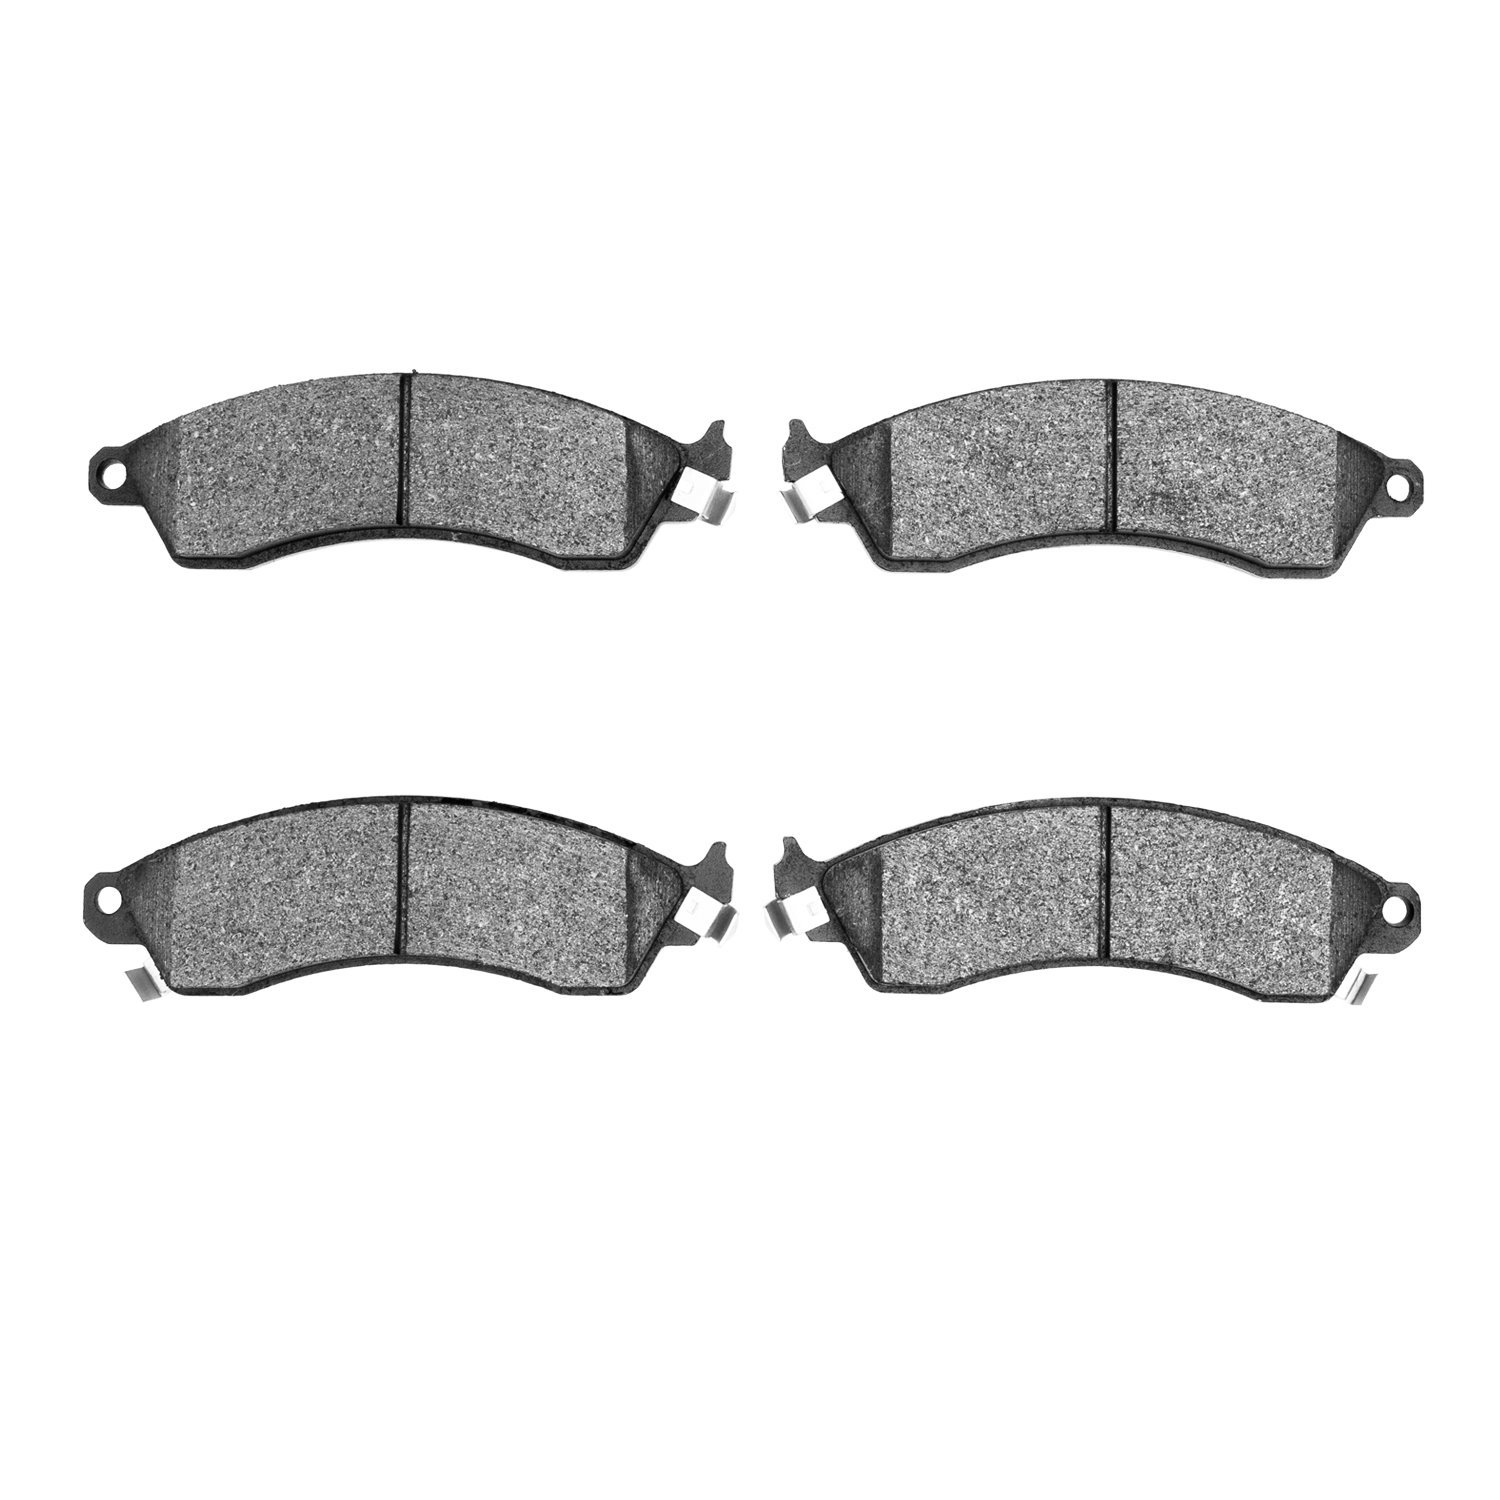 1310-0412-00 3000-Series Ceramic Brake Pads, 1985-2004 Multiple Makes/Models, Position: Front